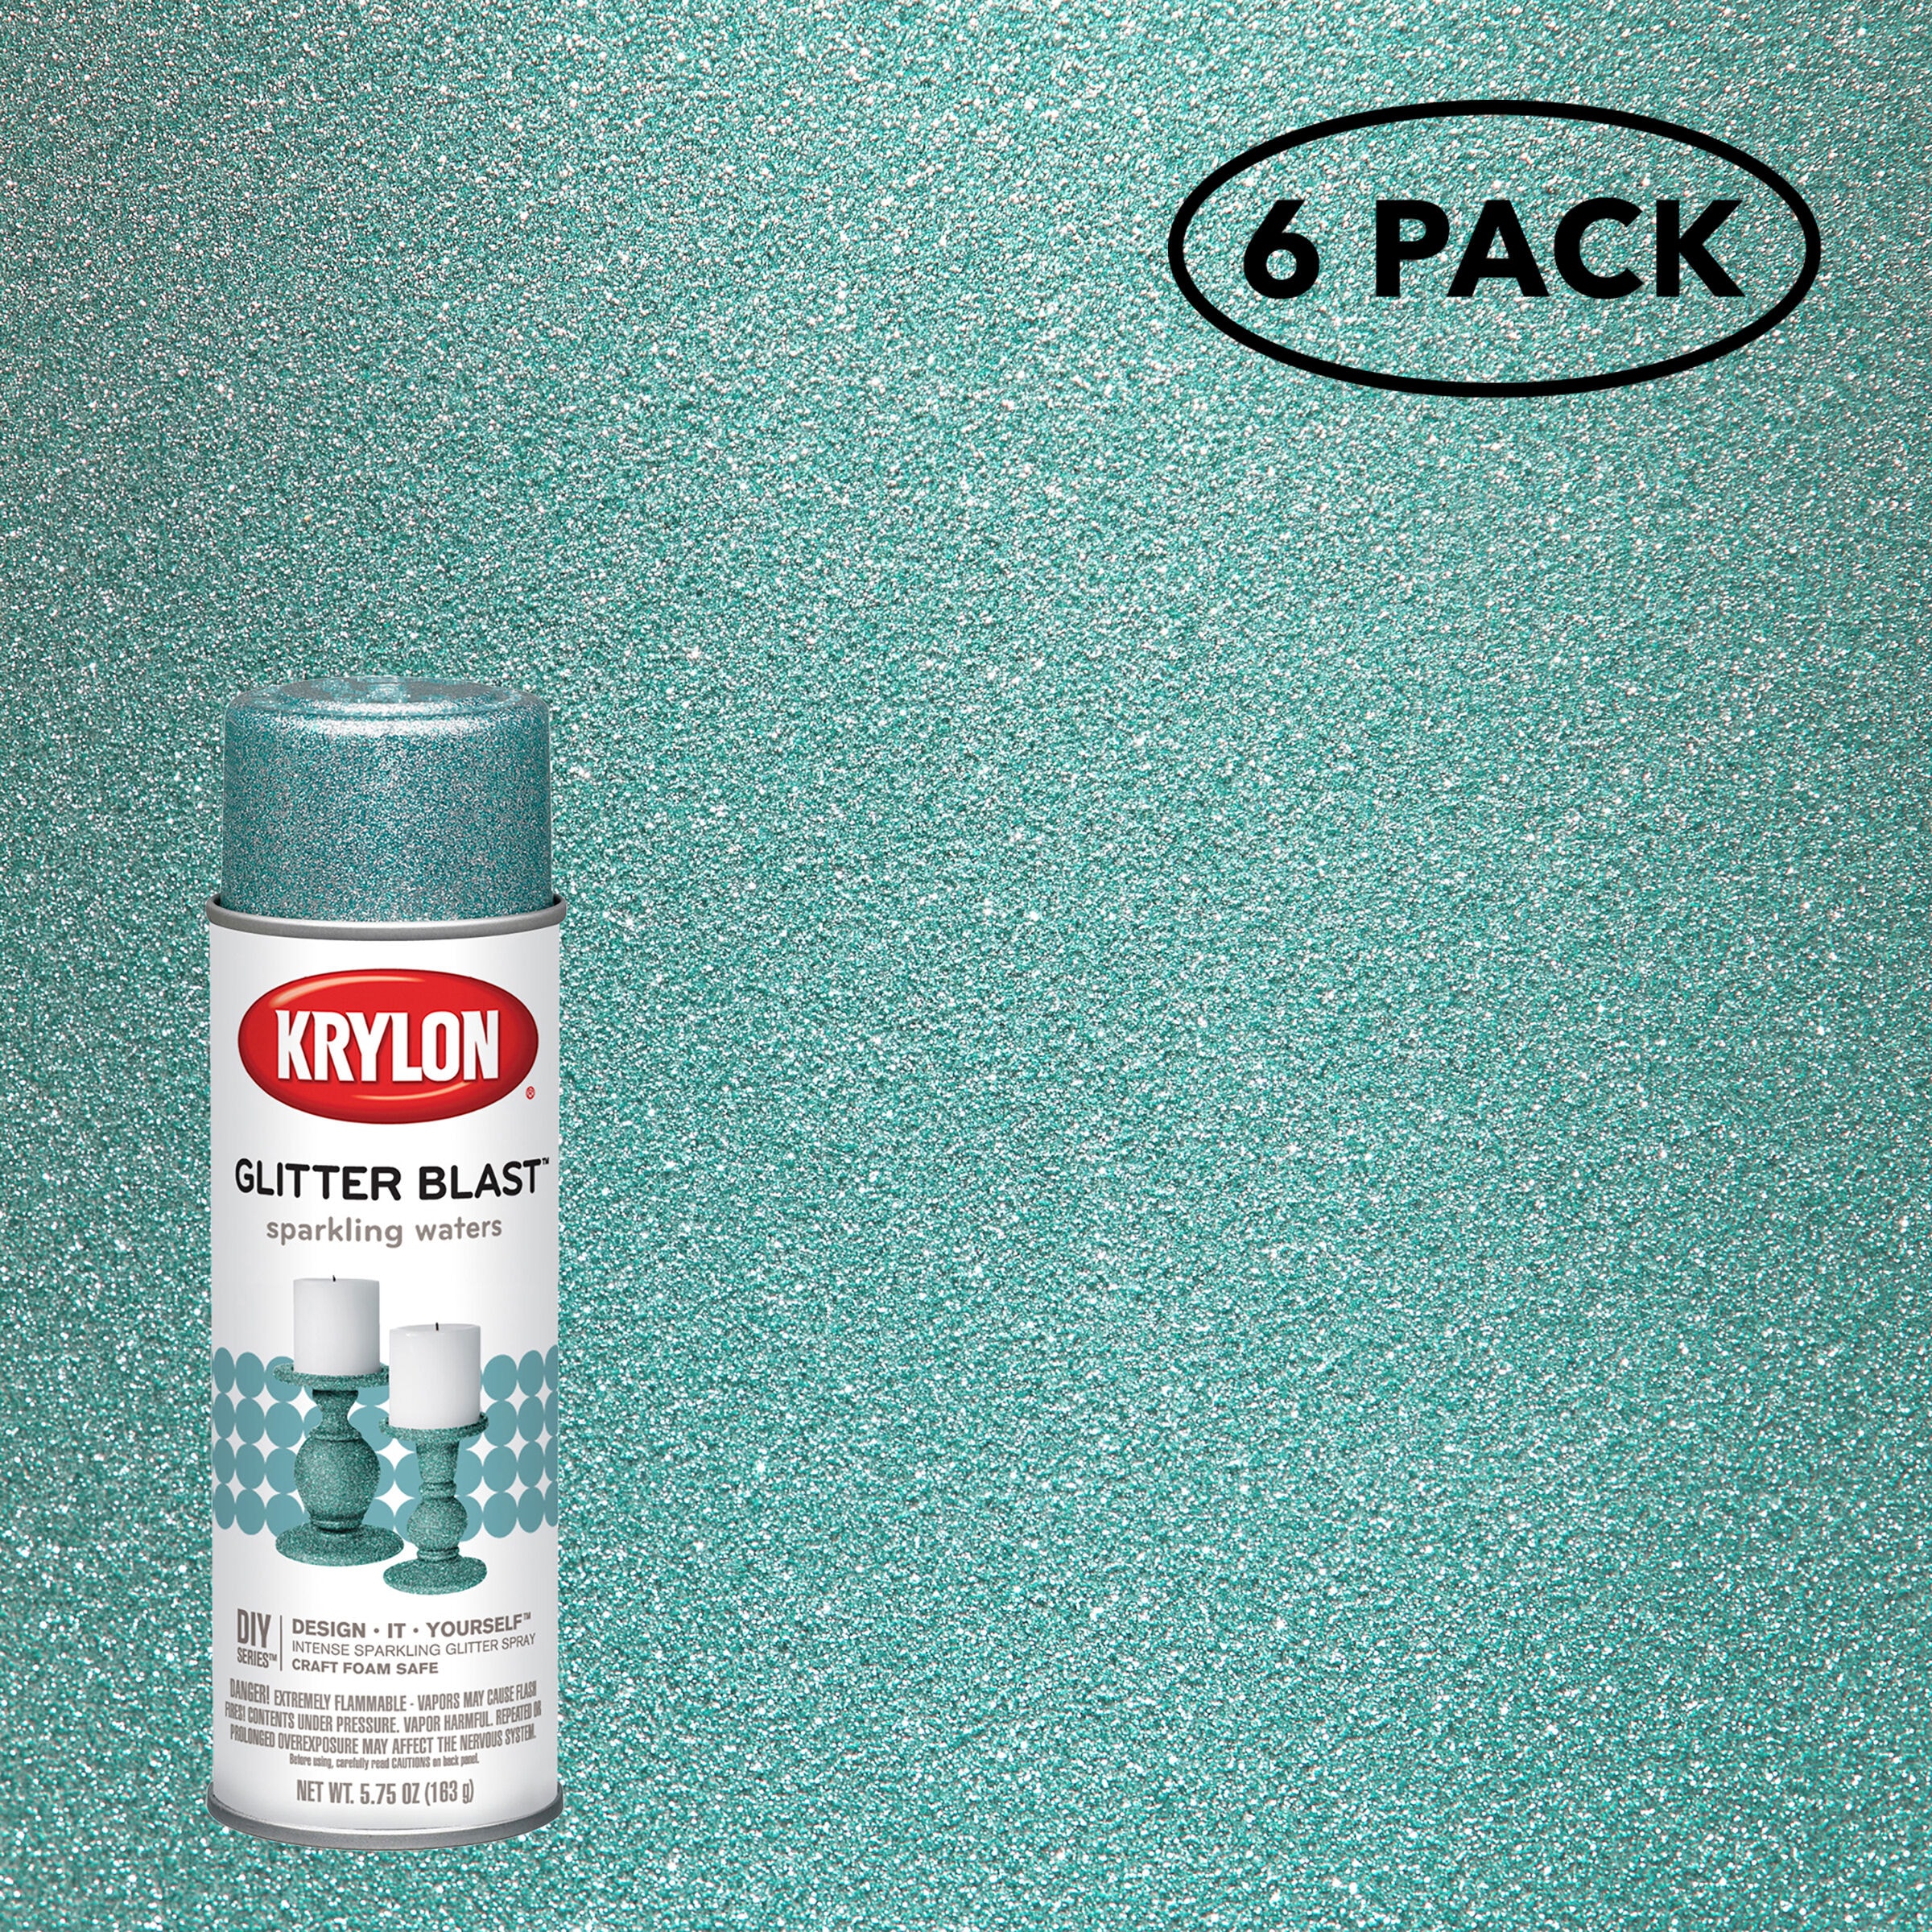 Krylon K03804A00 Glitter Blast Glitter Spray Paint for Craft Projects,  Diamond Dust, 5.75 oz